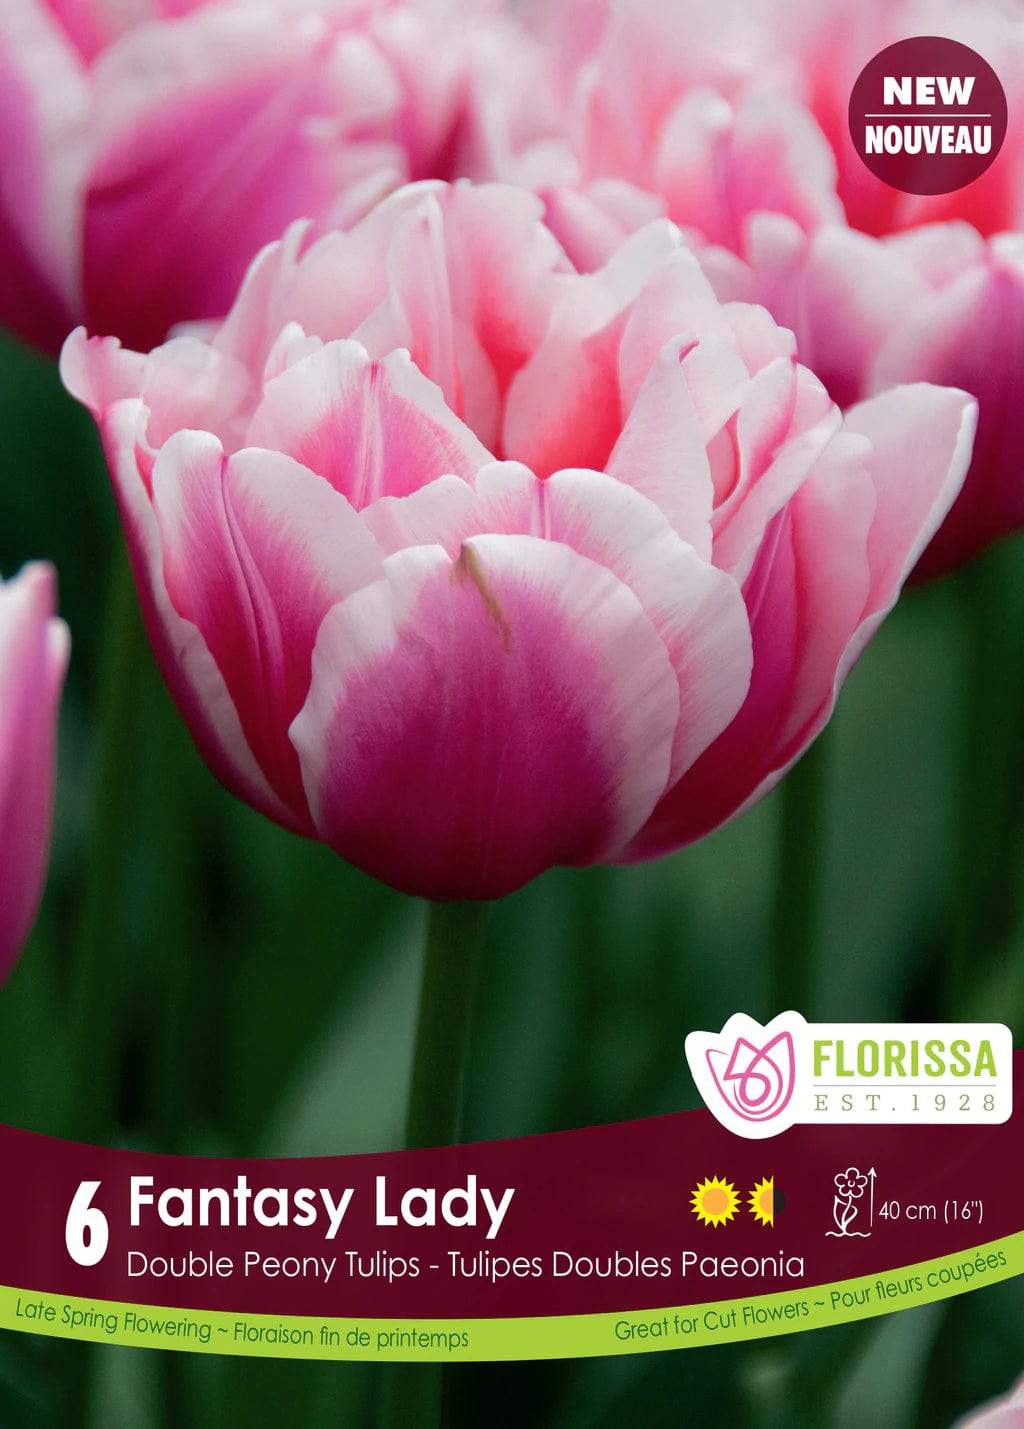 Tulip - Fantasy Lady, 6 Pack